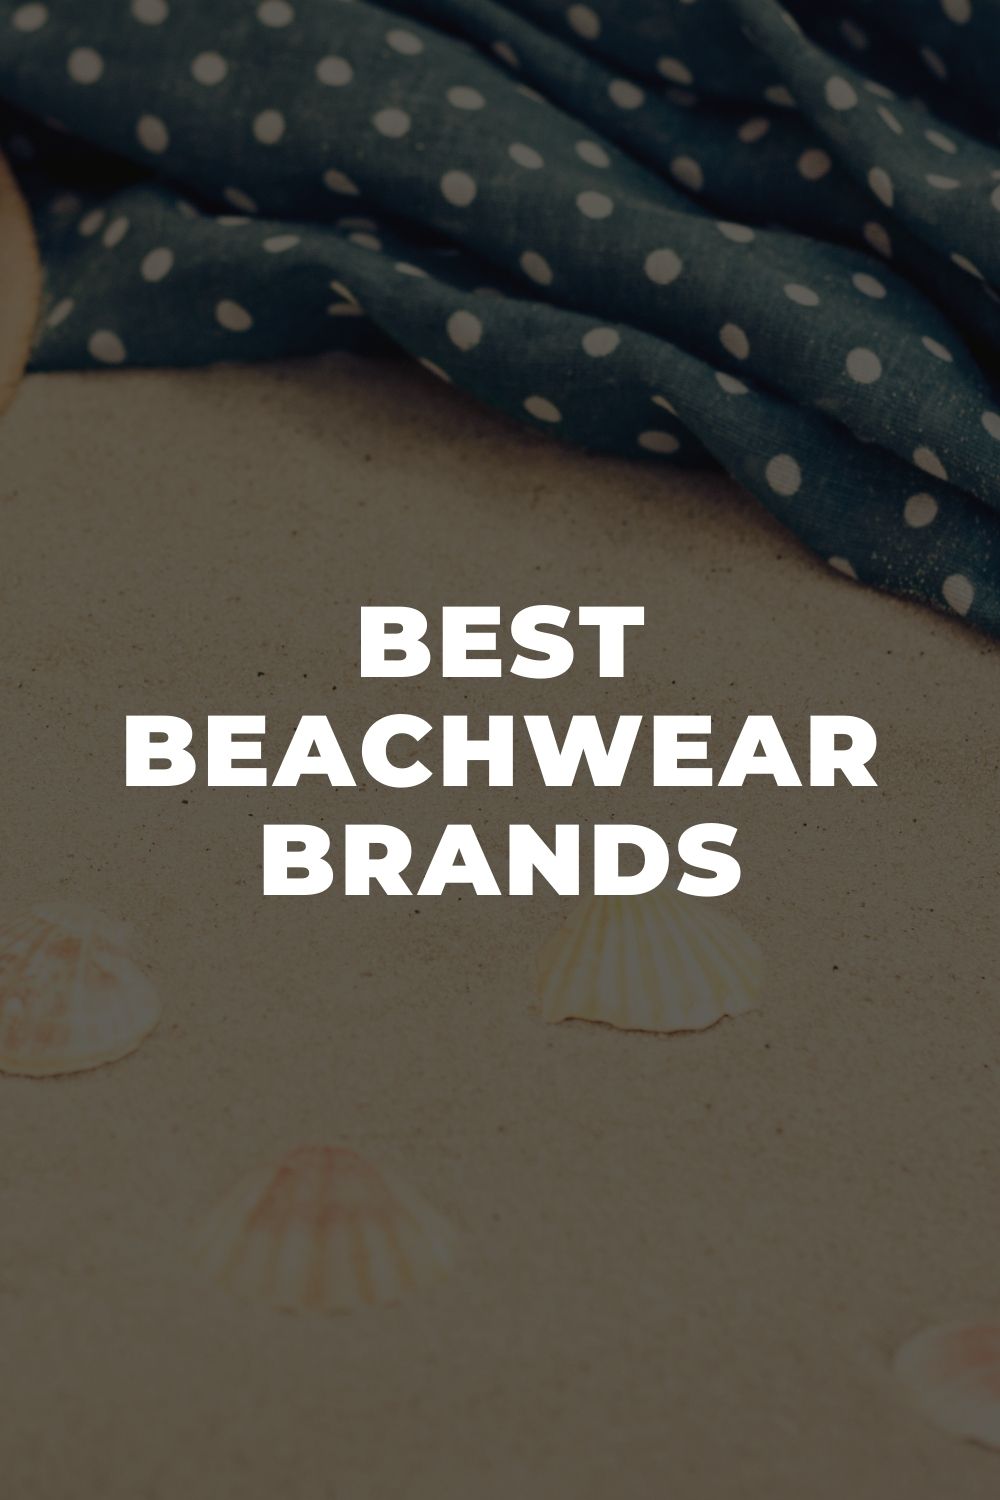 Best Beachwear Brands